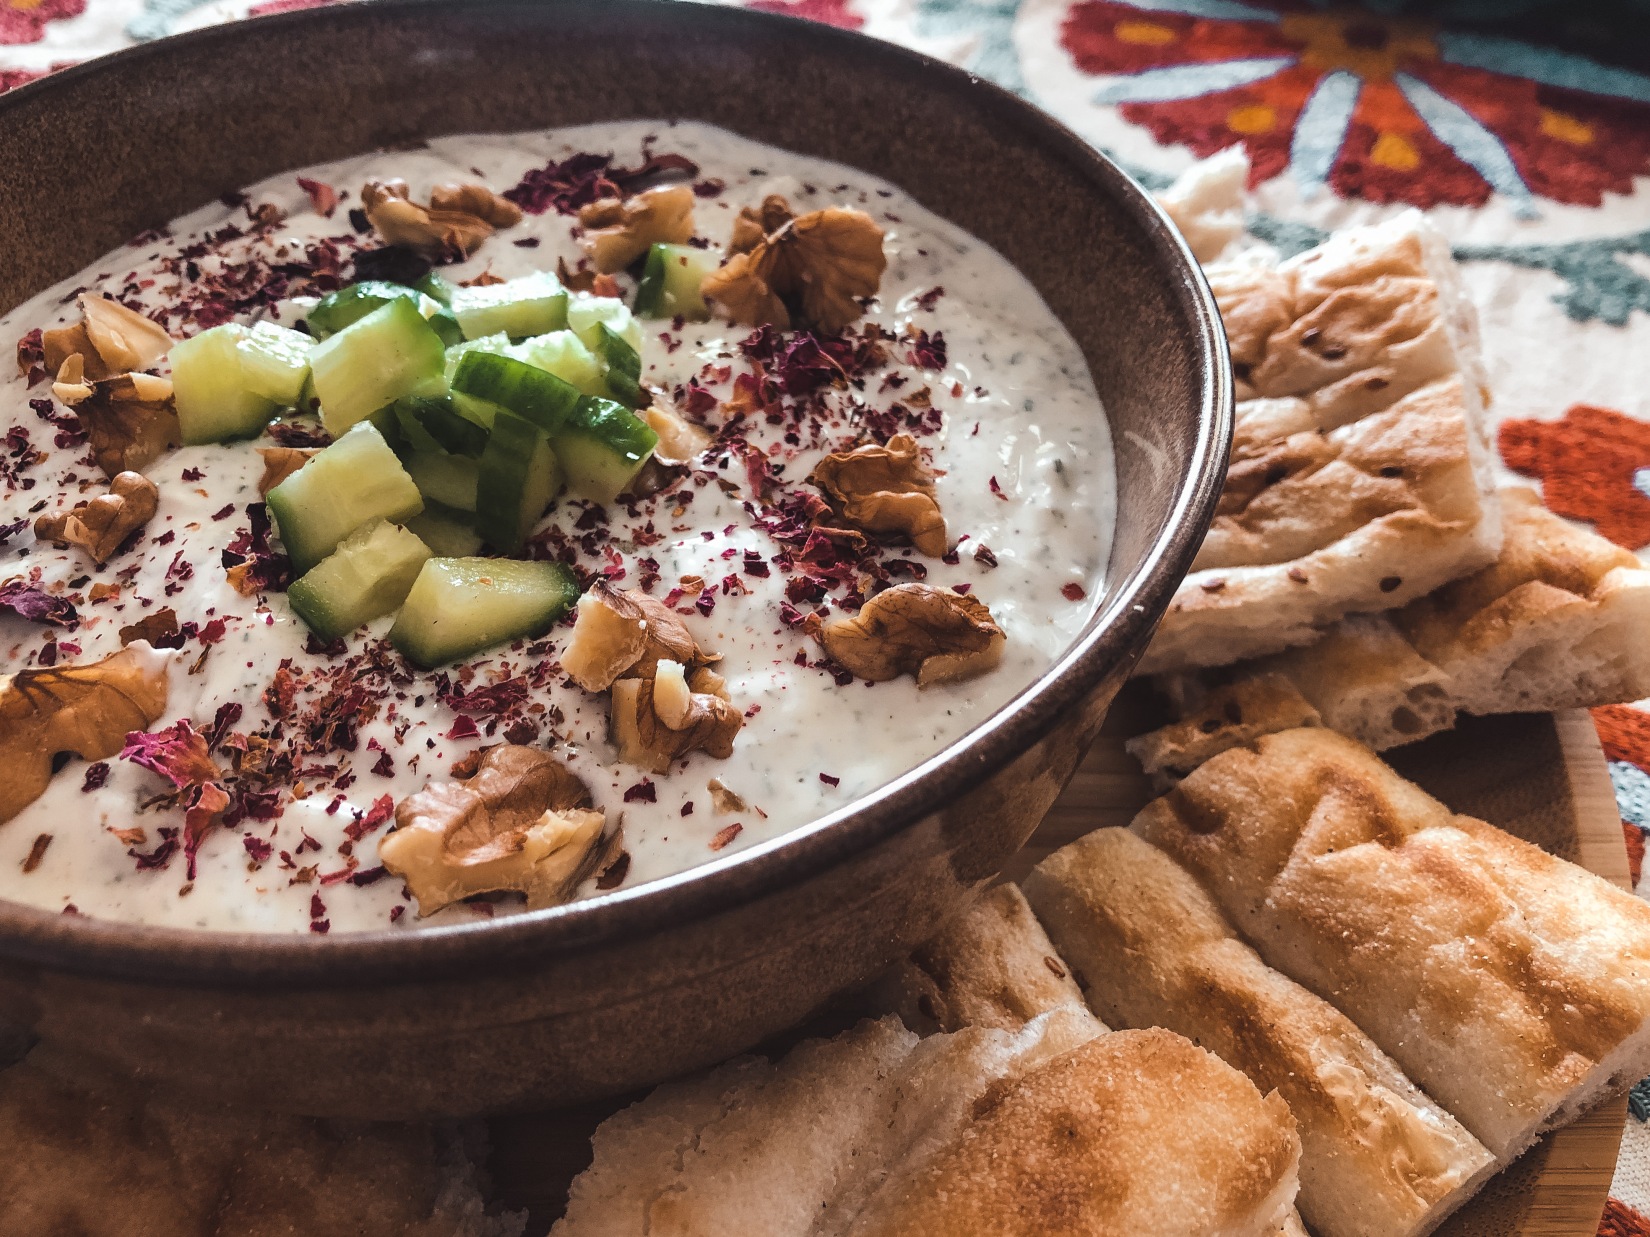 How to Make Persian Yogurt Dip | “Mast-o Khiar” – Sarah Bahiraei